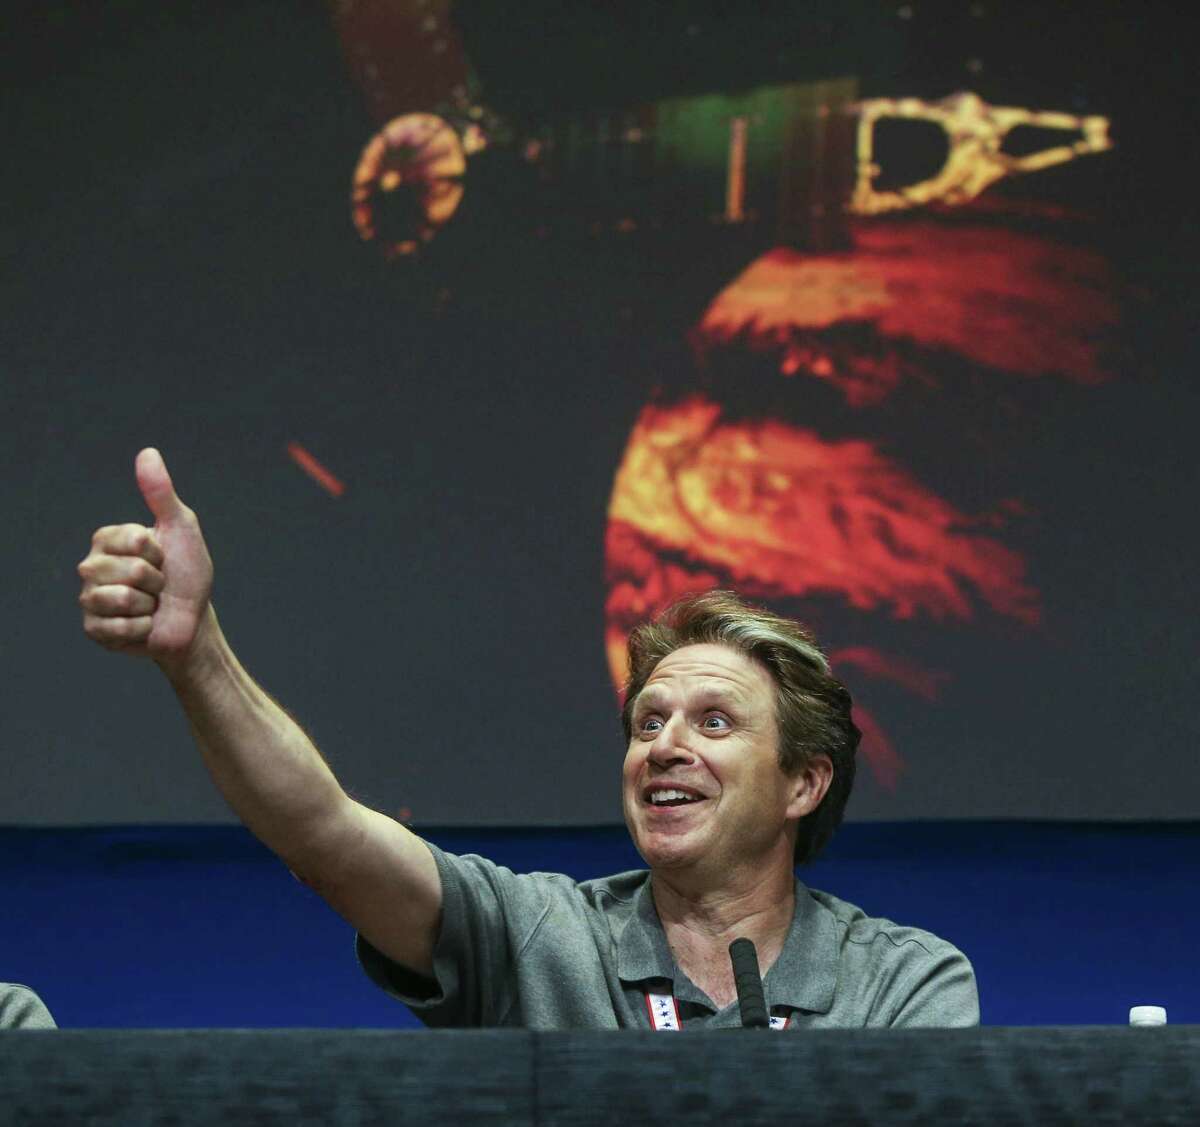 Scott Bolton speaks in a post-orbit insertion briefing at NASA's Jet Propulsion Laboratory following the solar-powered Juno spacecraft entering orbit around Jupiter on Monday, July 4, 2016.